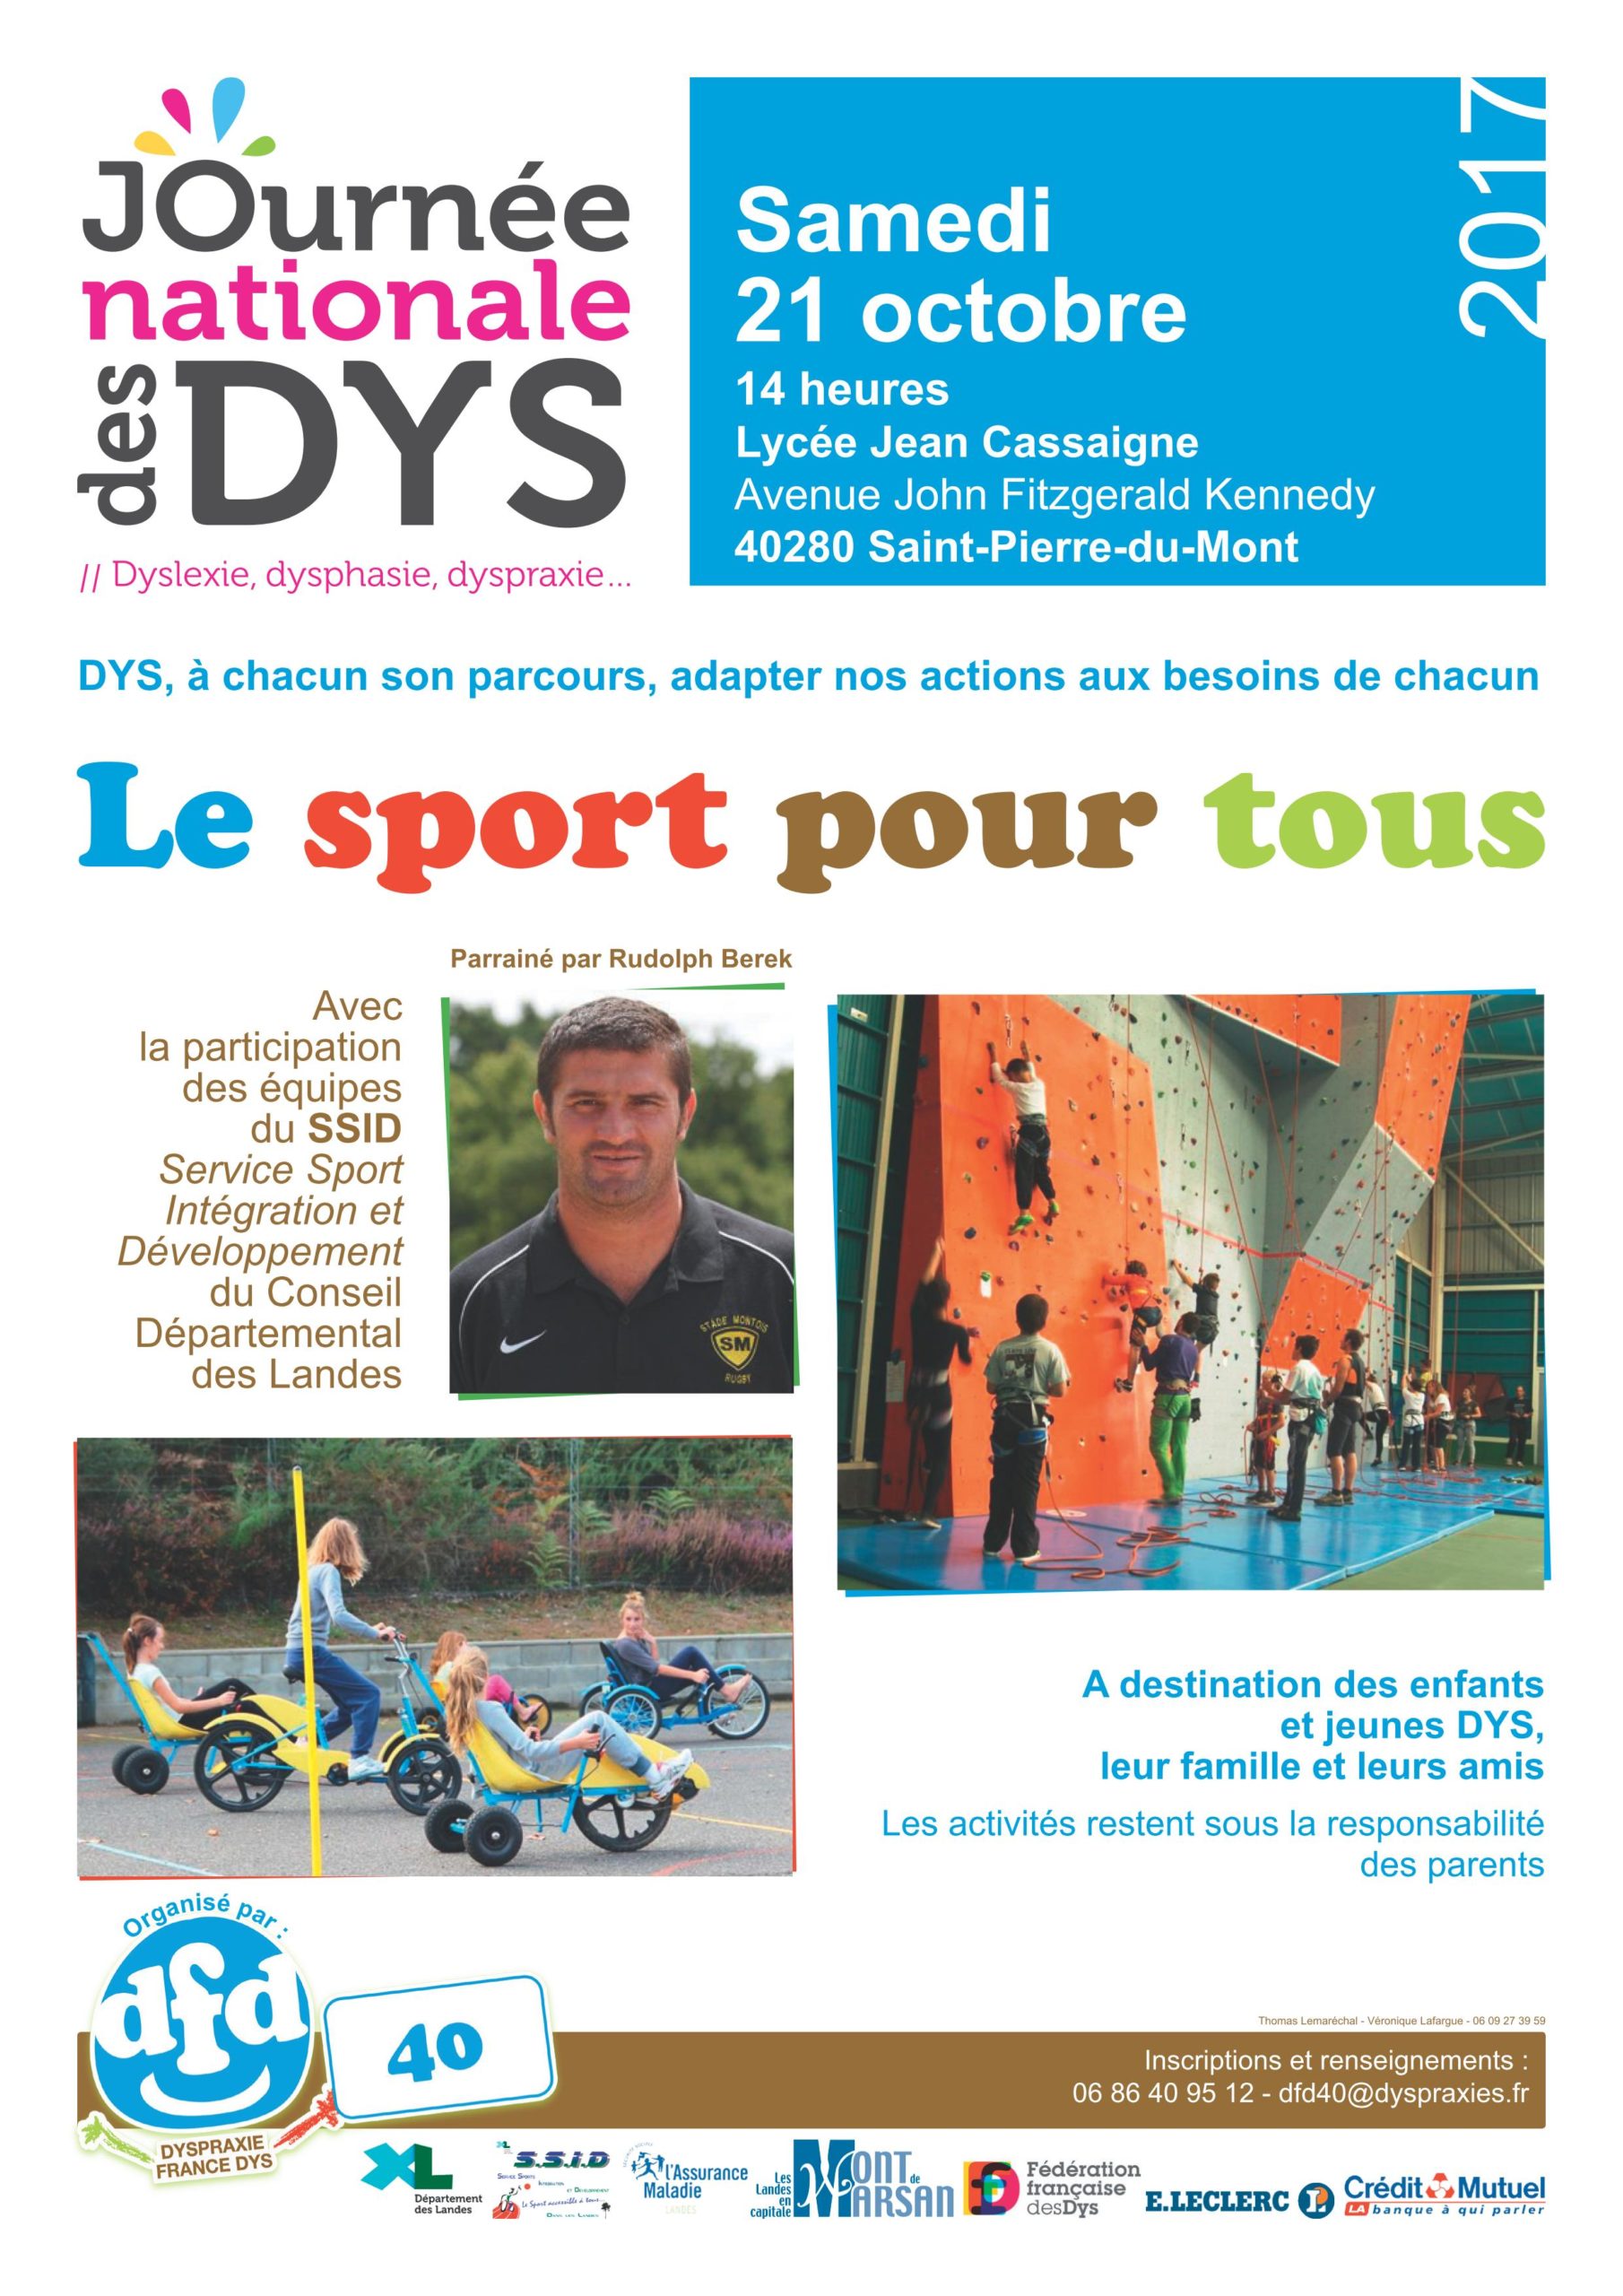 DFD40 : Journée dys sportive